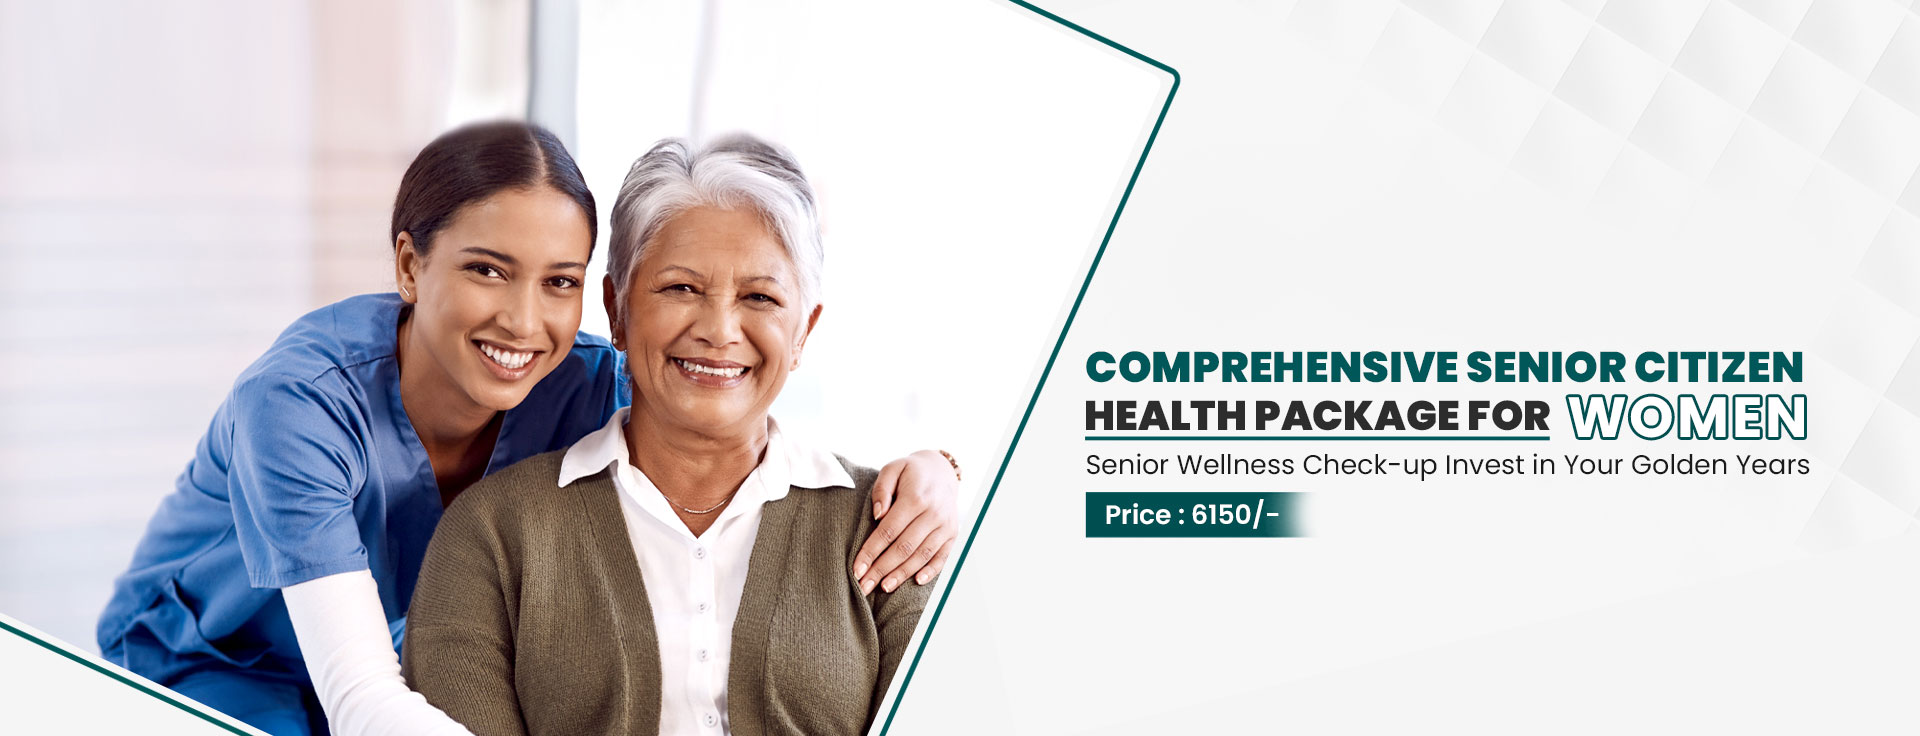 Comprehensive Senior Citizen Health Package for Women